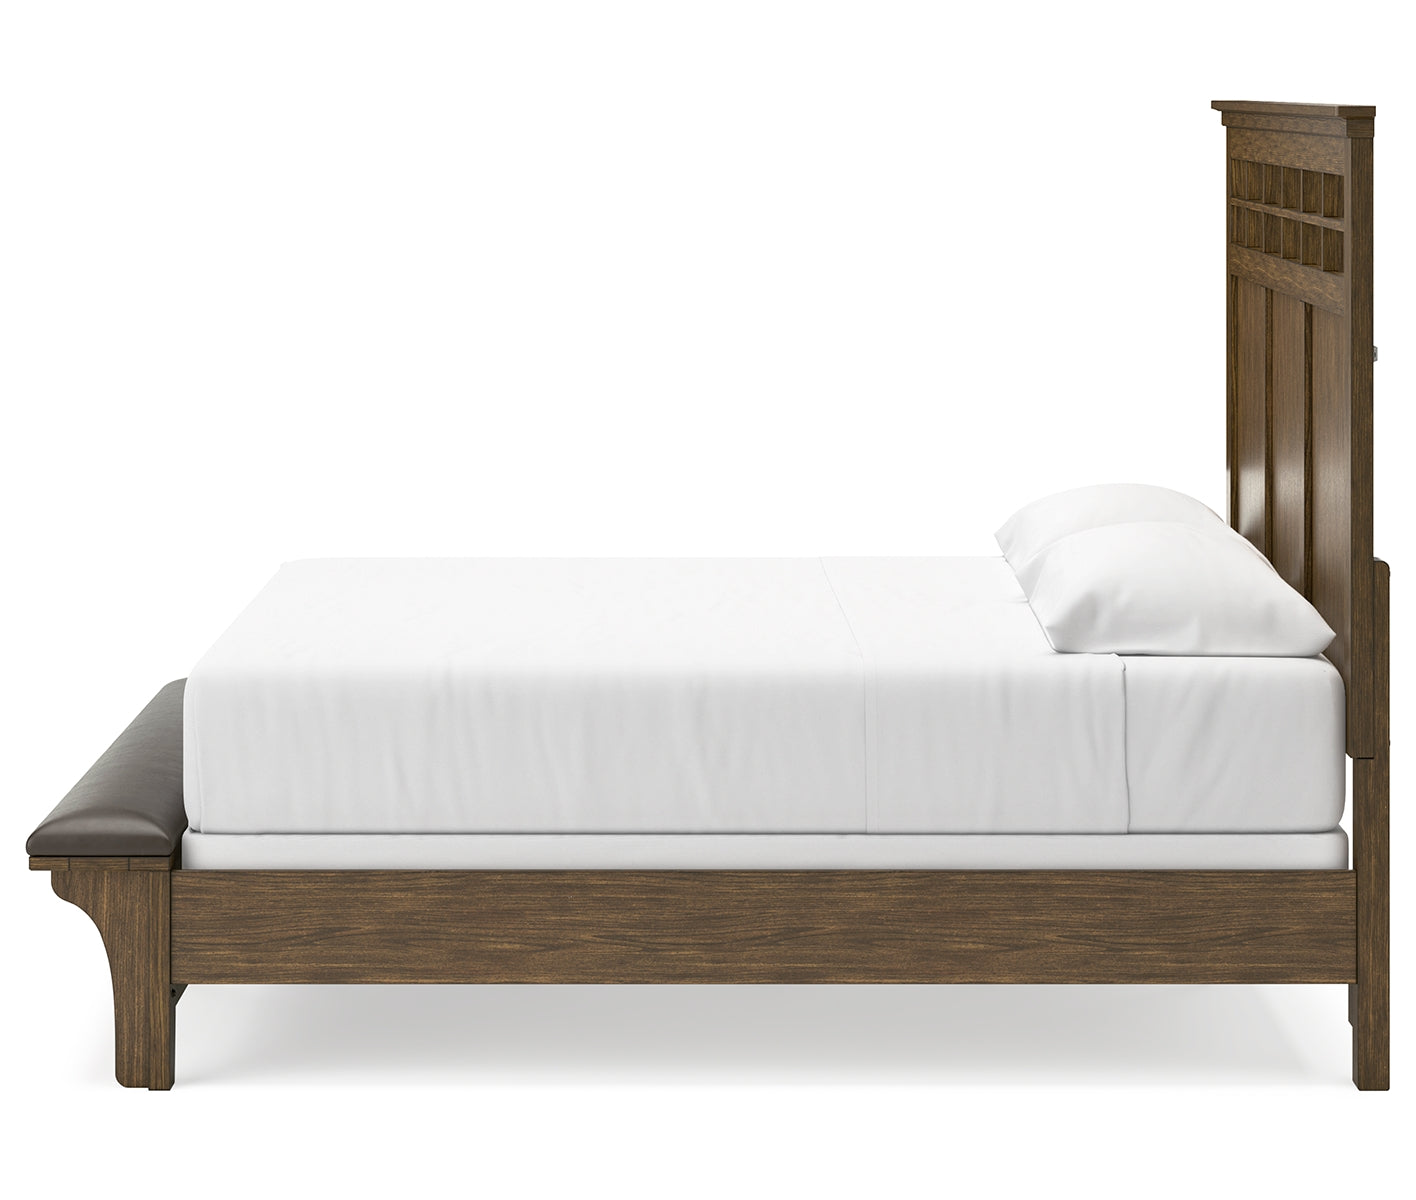 Shawbeck King Panel Bed